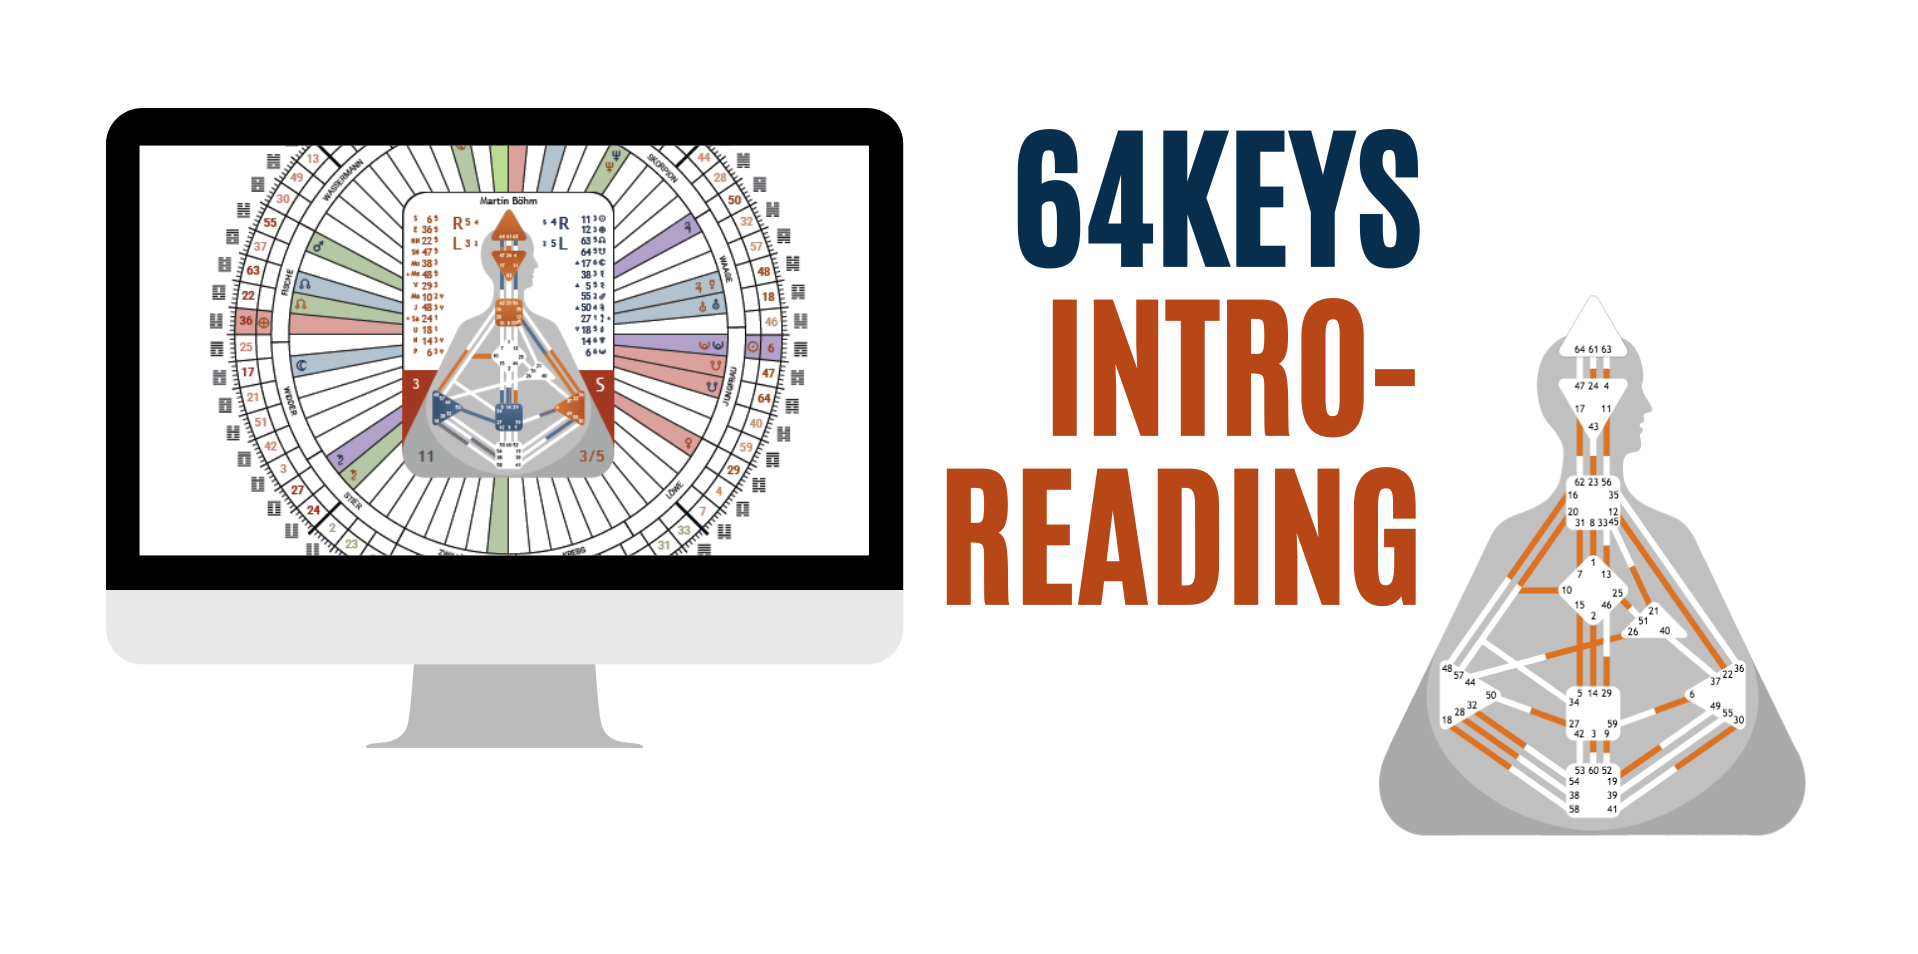 64keys Intro Reading